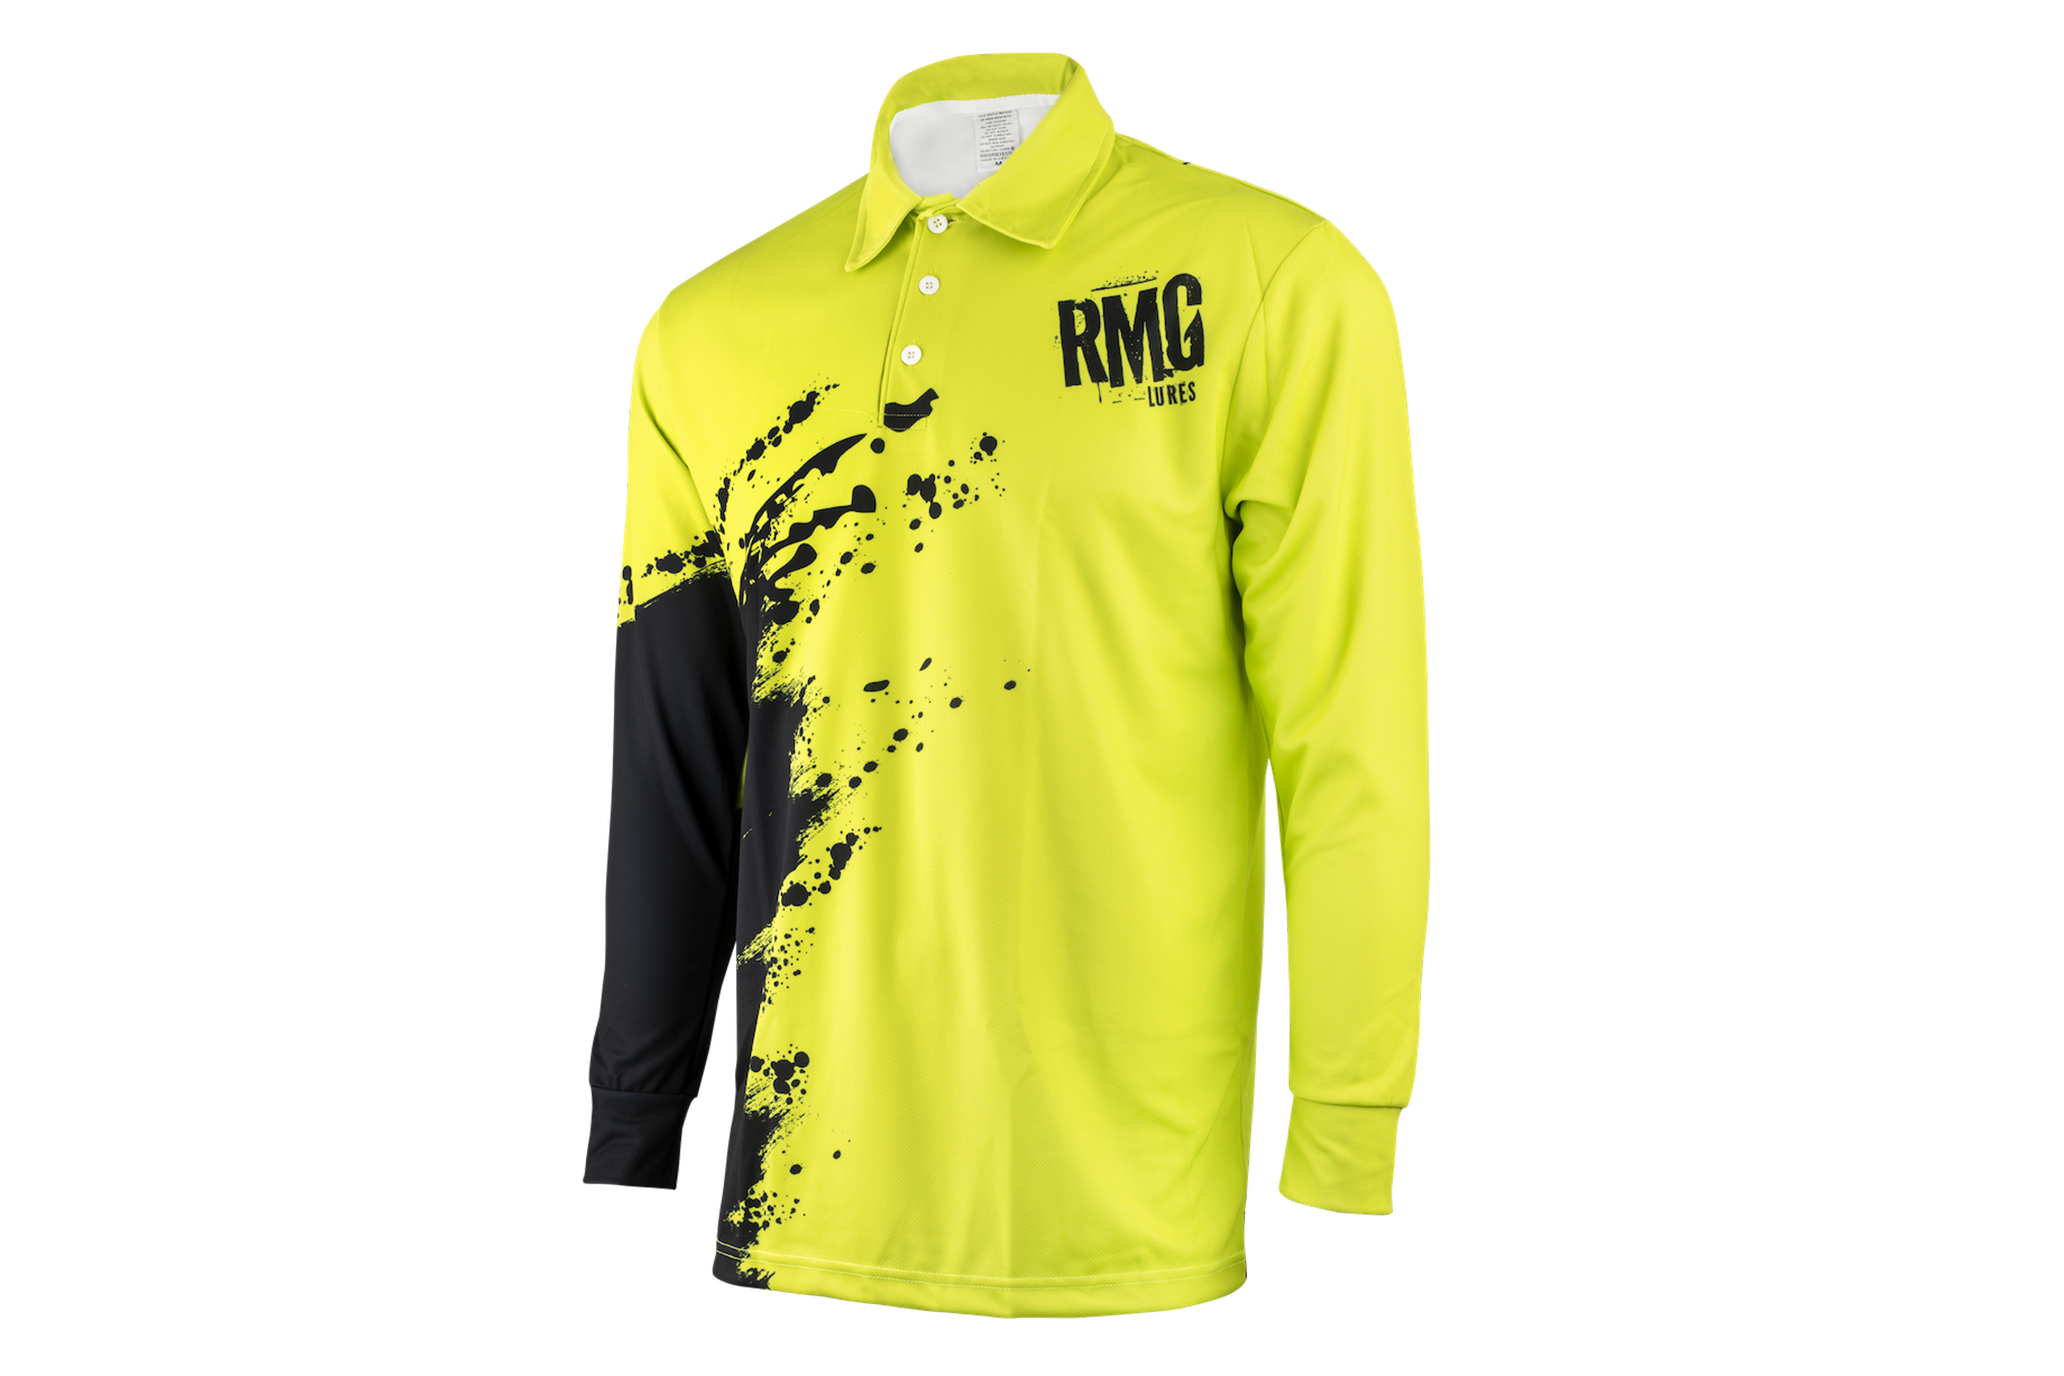 RMG Tournament Shirt